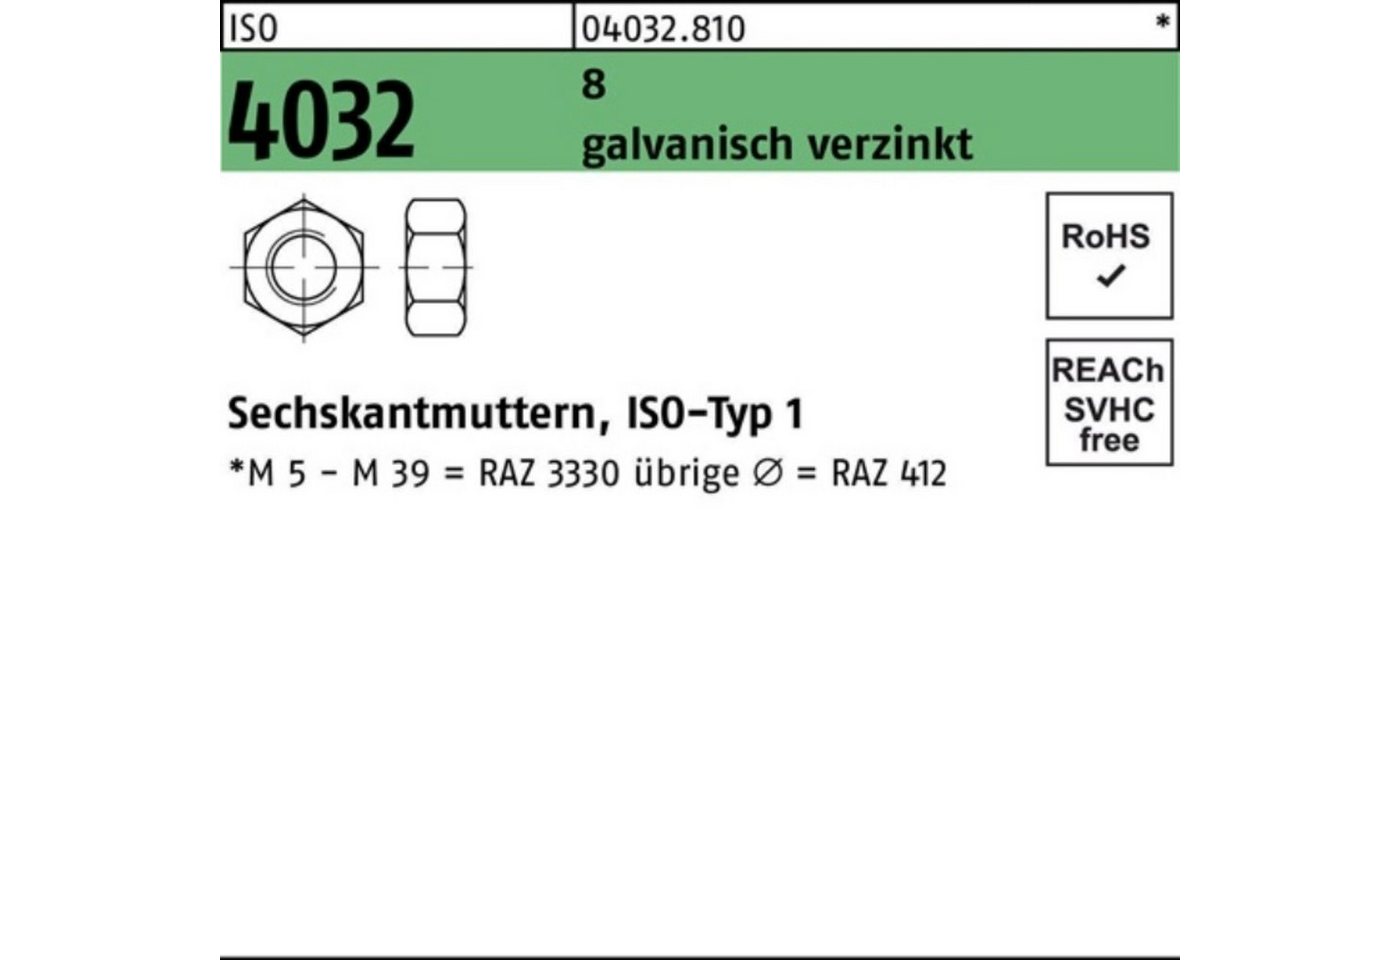 Bufab Muttern 100er Pack Sechskantmutter ISO 4032 M27 8 galv.verz. 50 Stück ISO 403 von Bufab